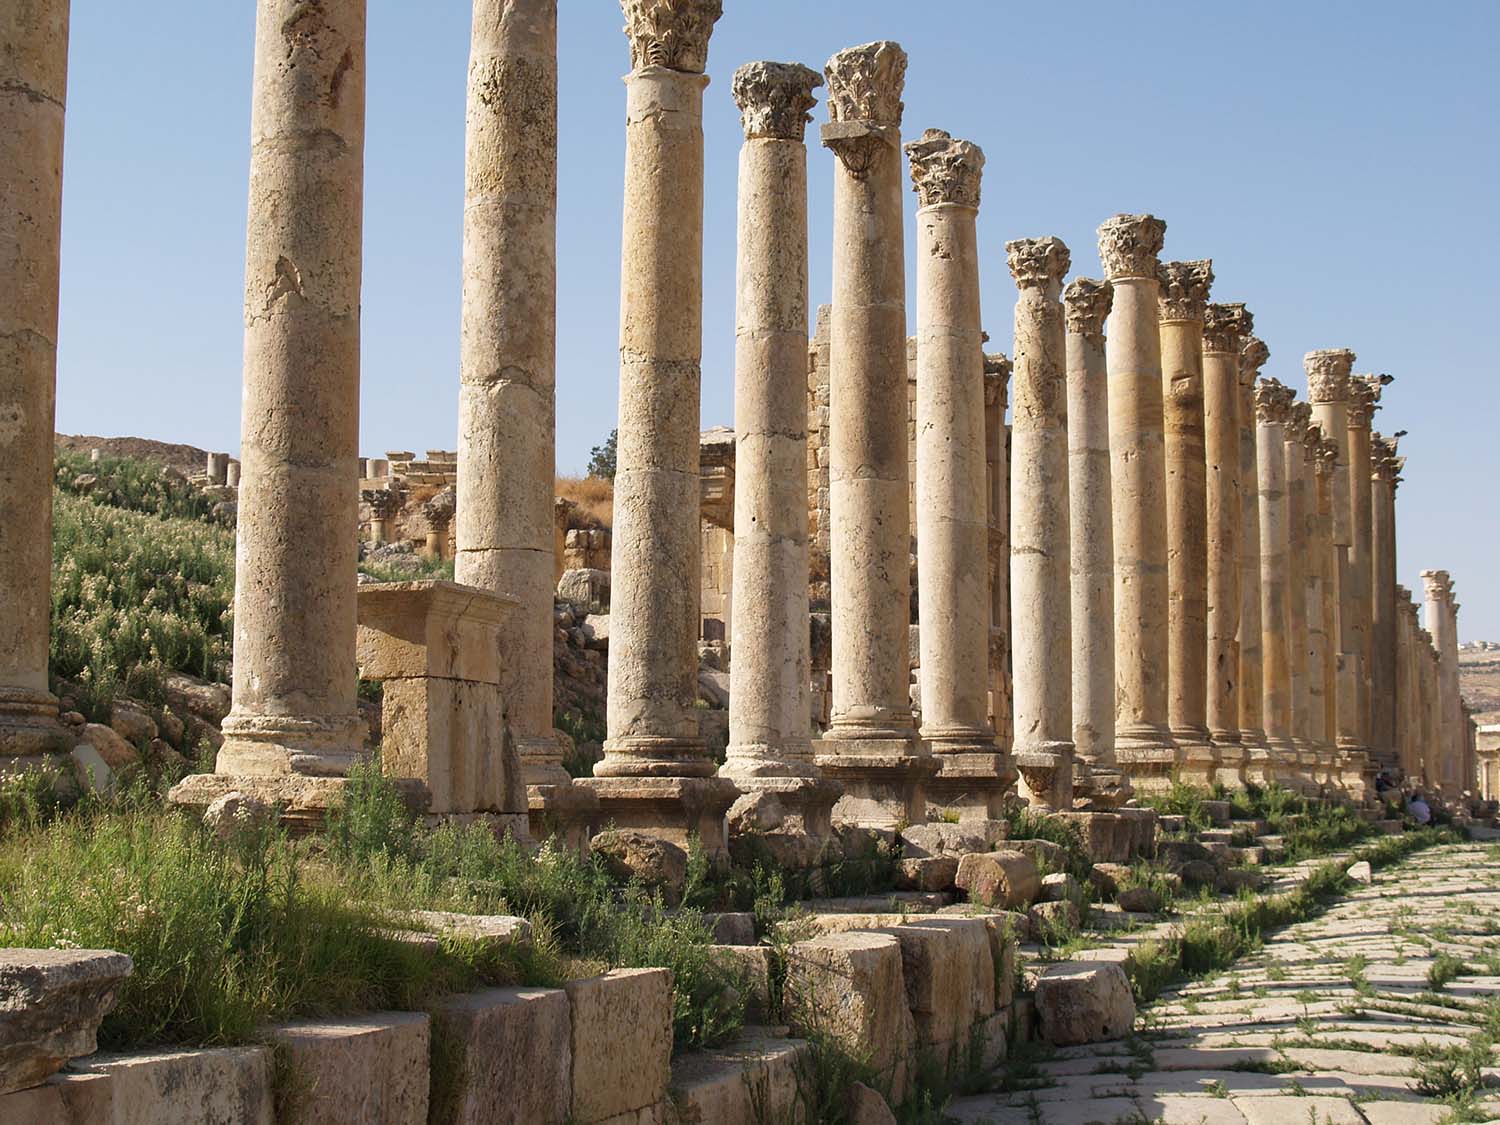 View of colonnade along Cardo Maximus